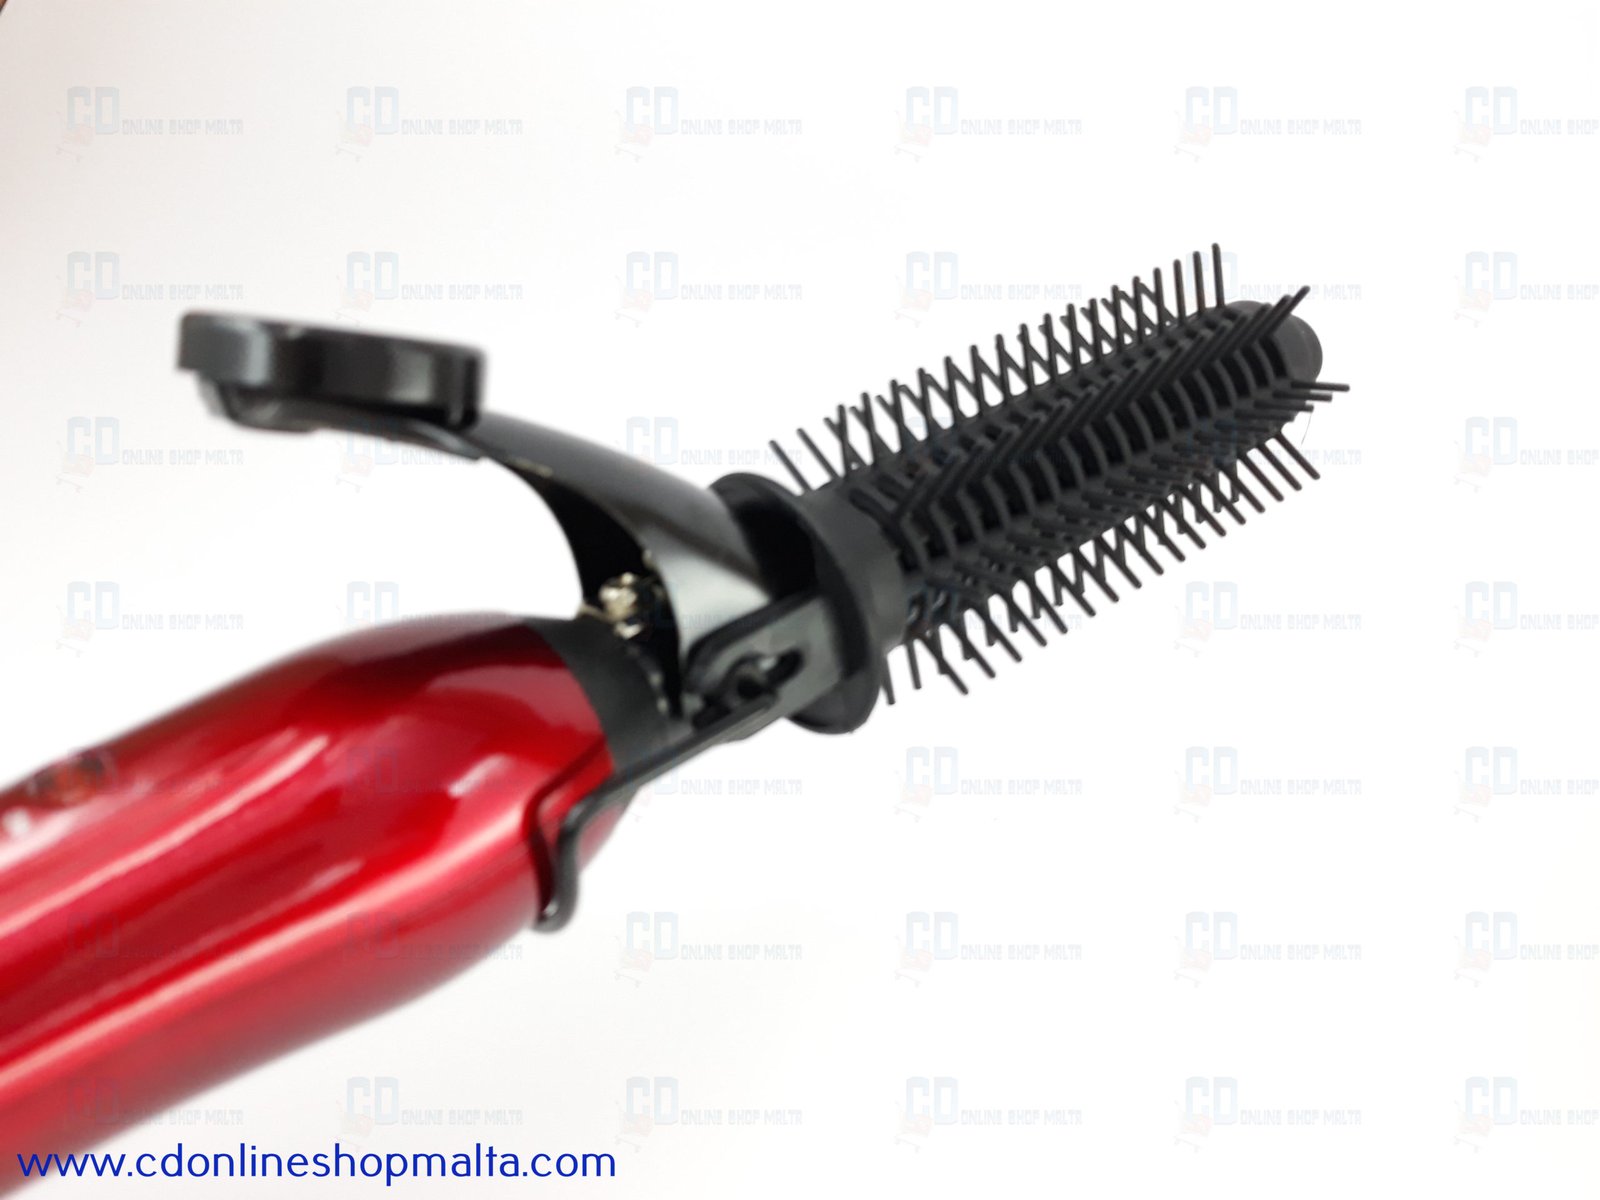 Electric hair straightener brush 2 in 1 | CD Online Shop Malta